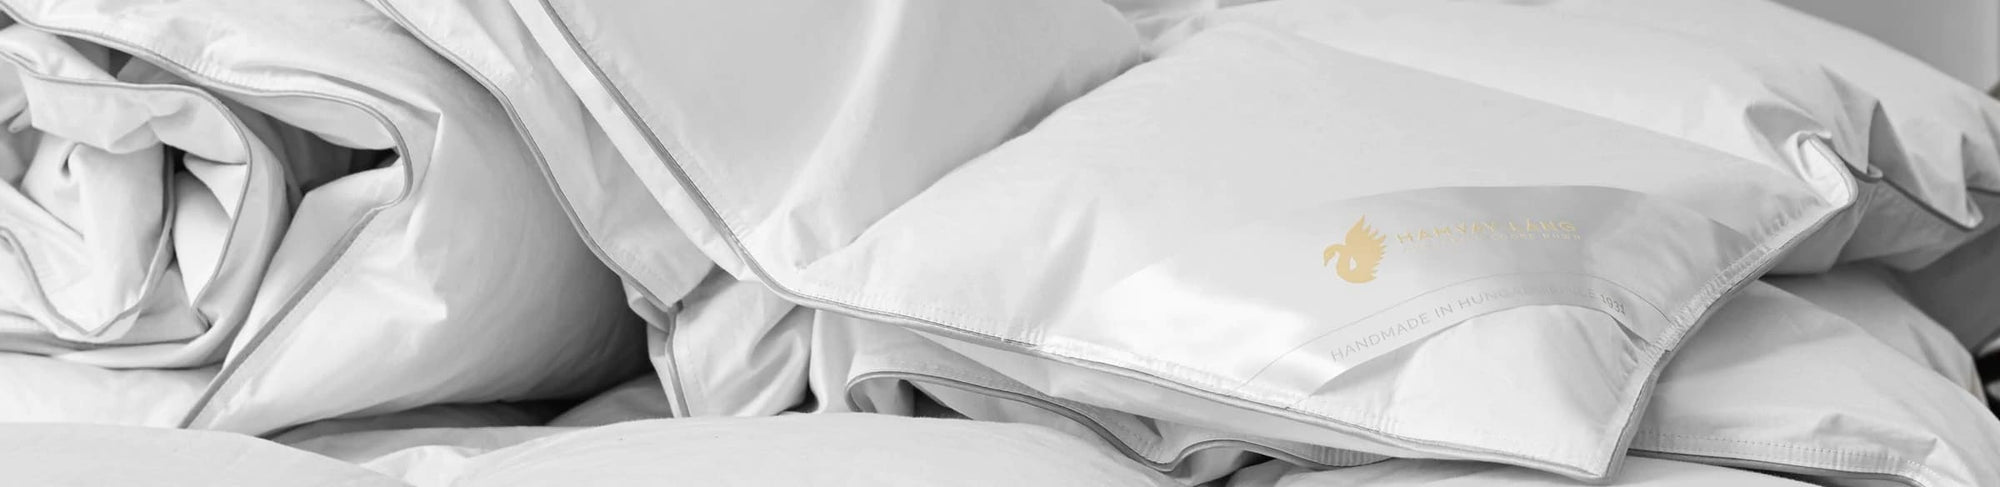 detail of white goose down comforter